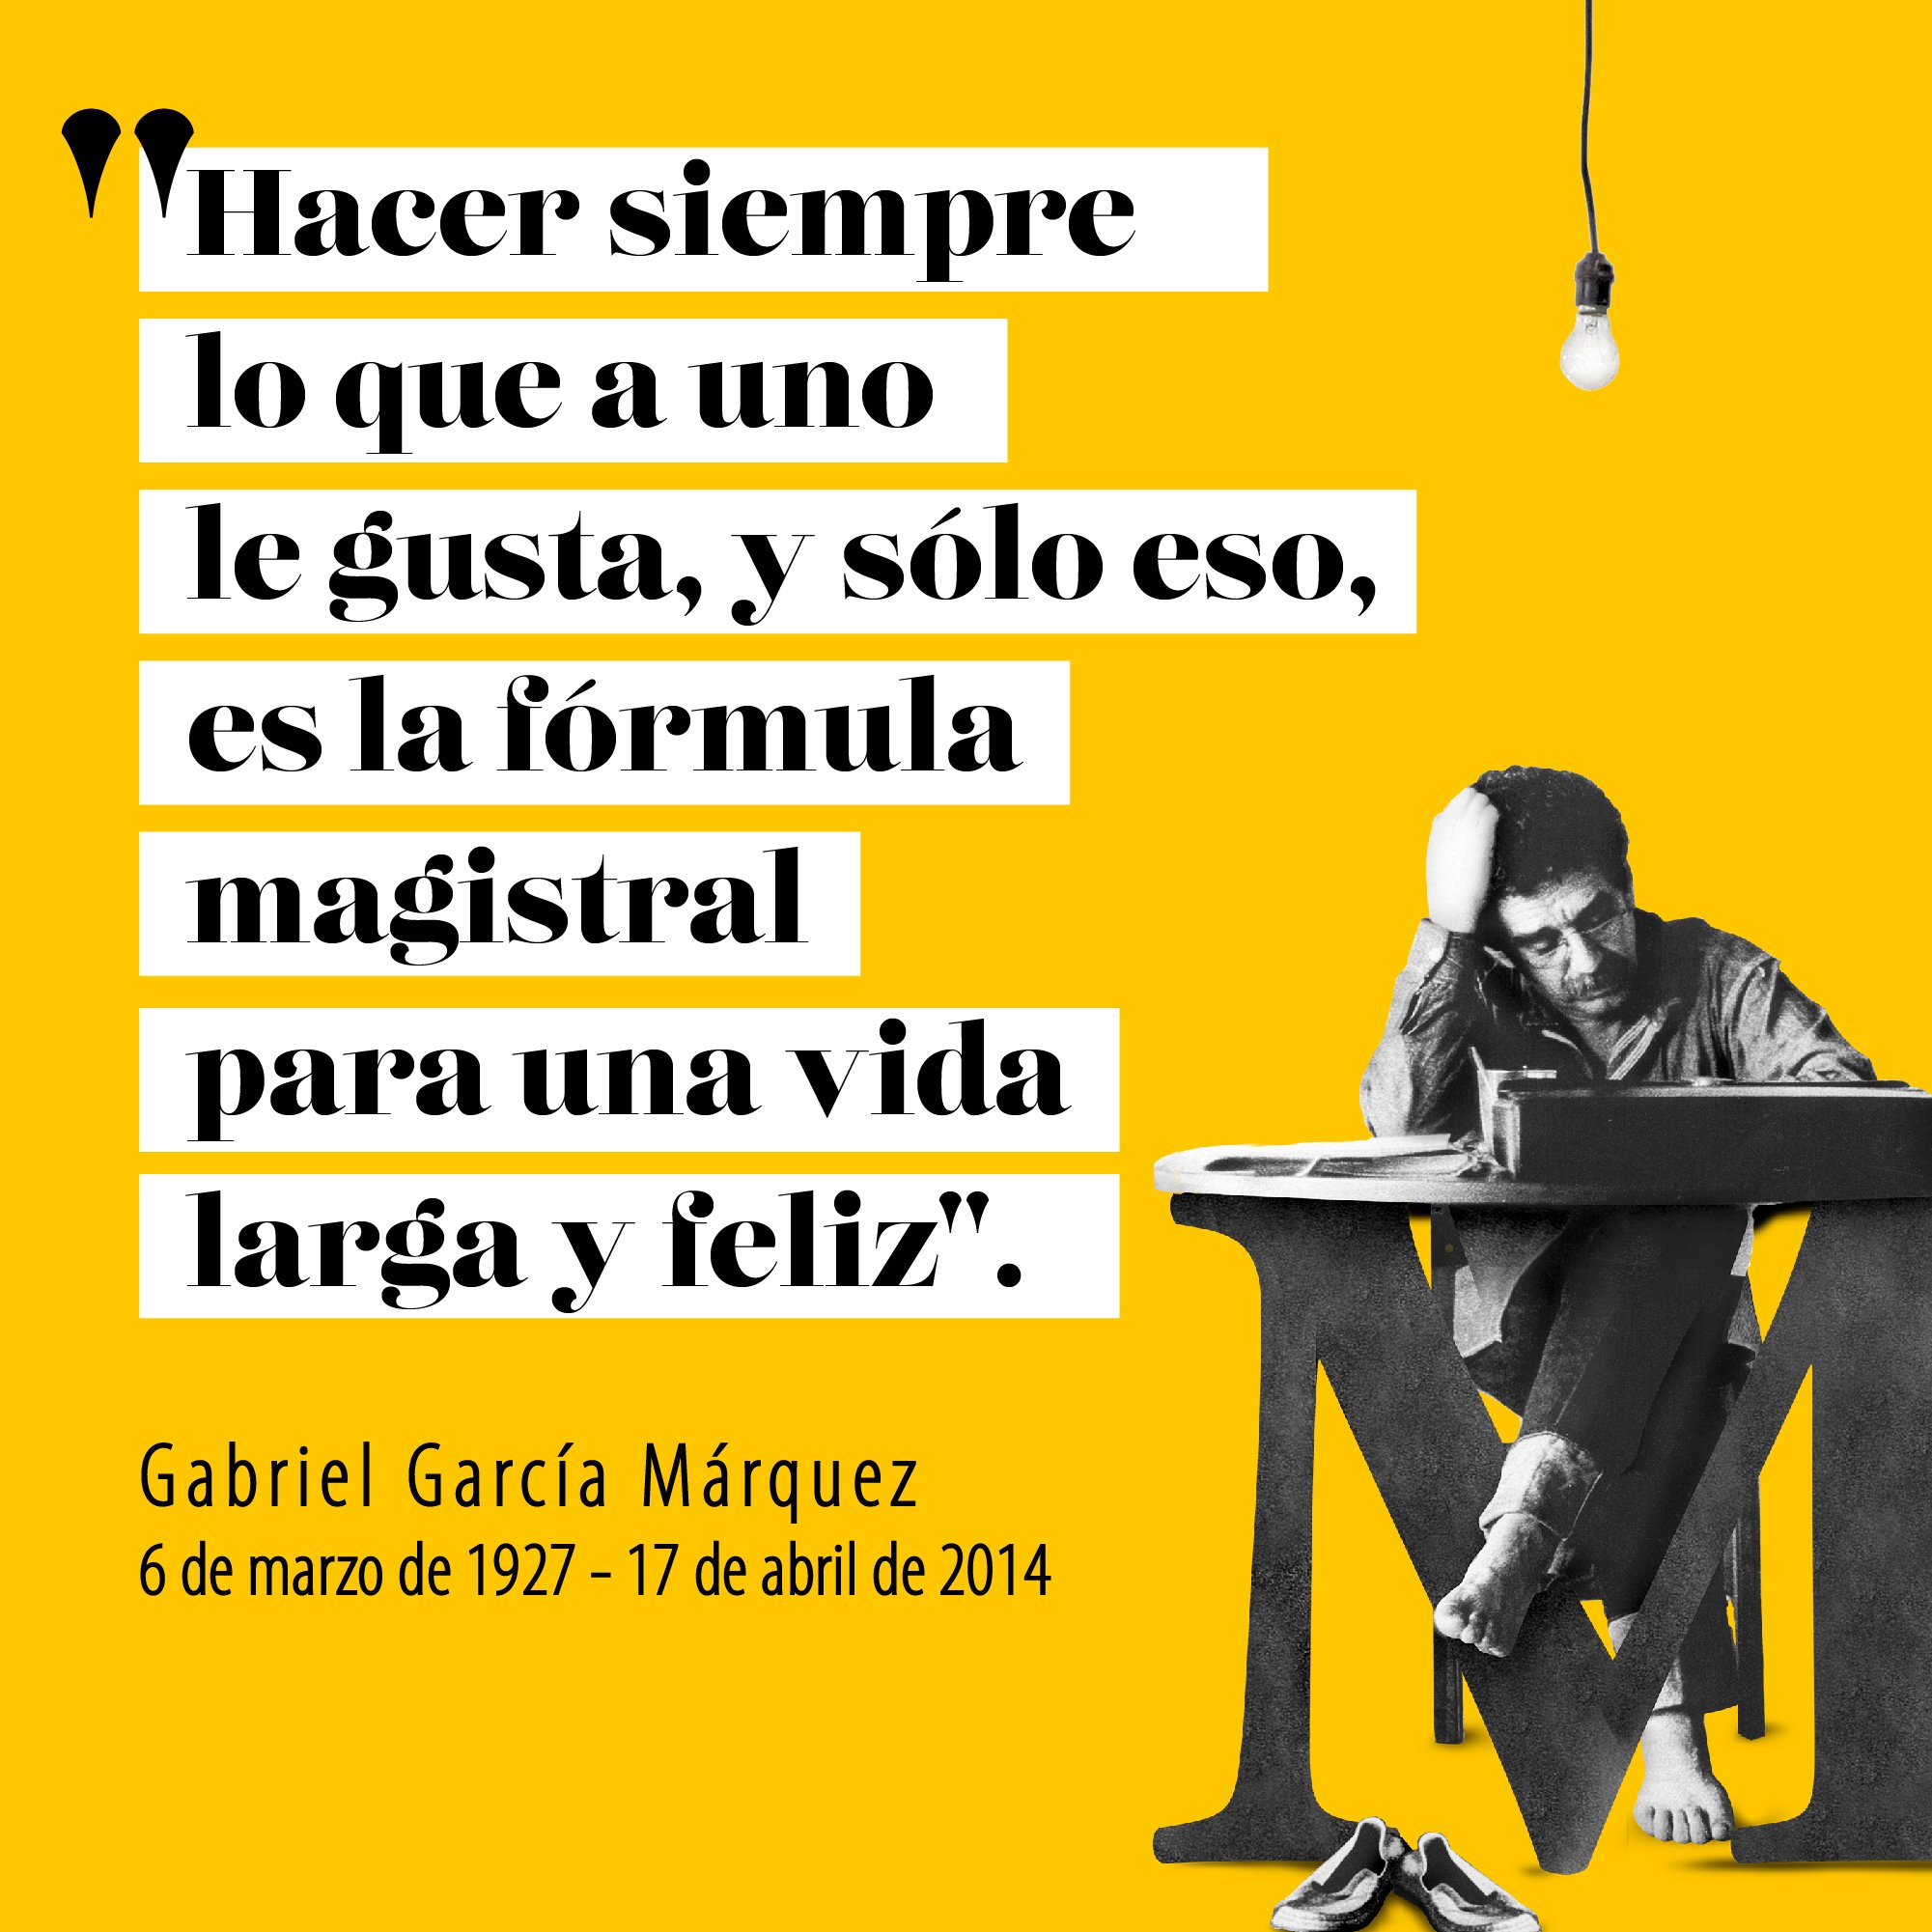 Fundación Gabo on Twitter: 